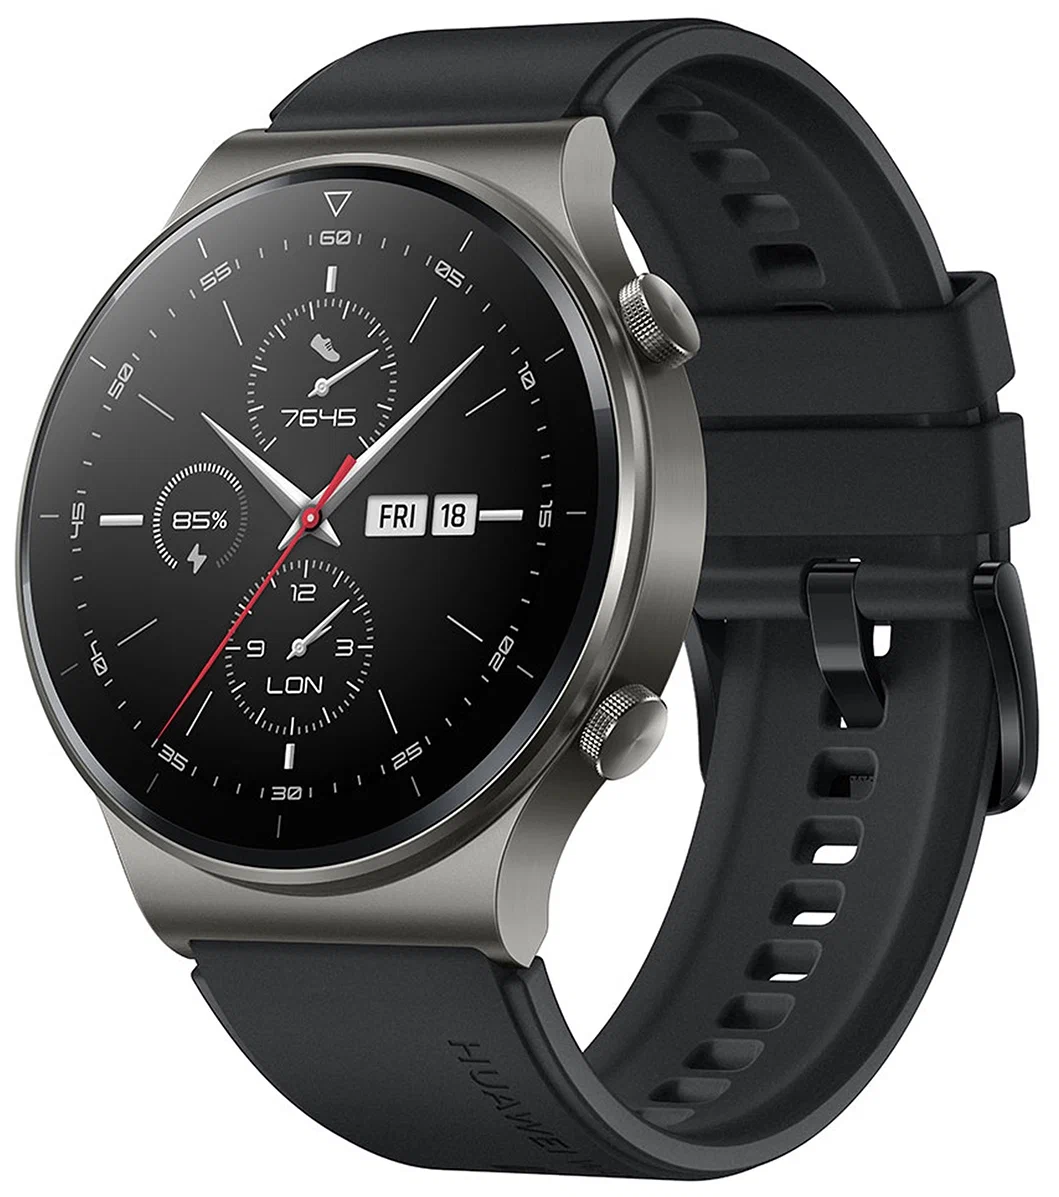 Smart watch HUAWEI WATCH GT 2 Pro, black night